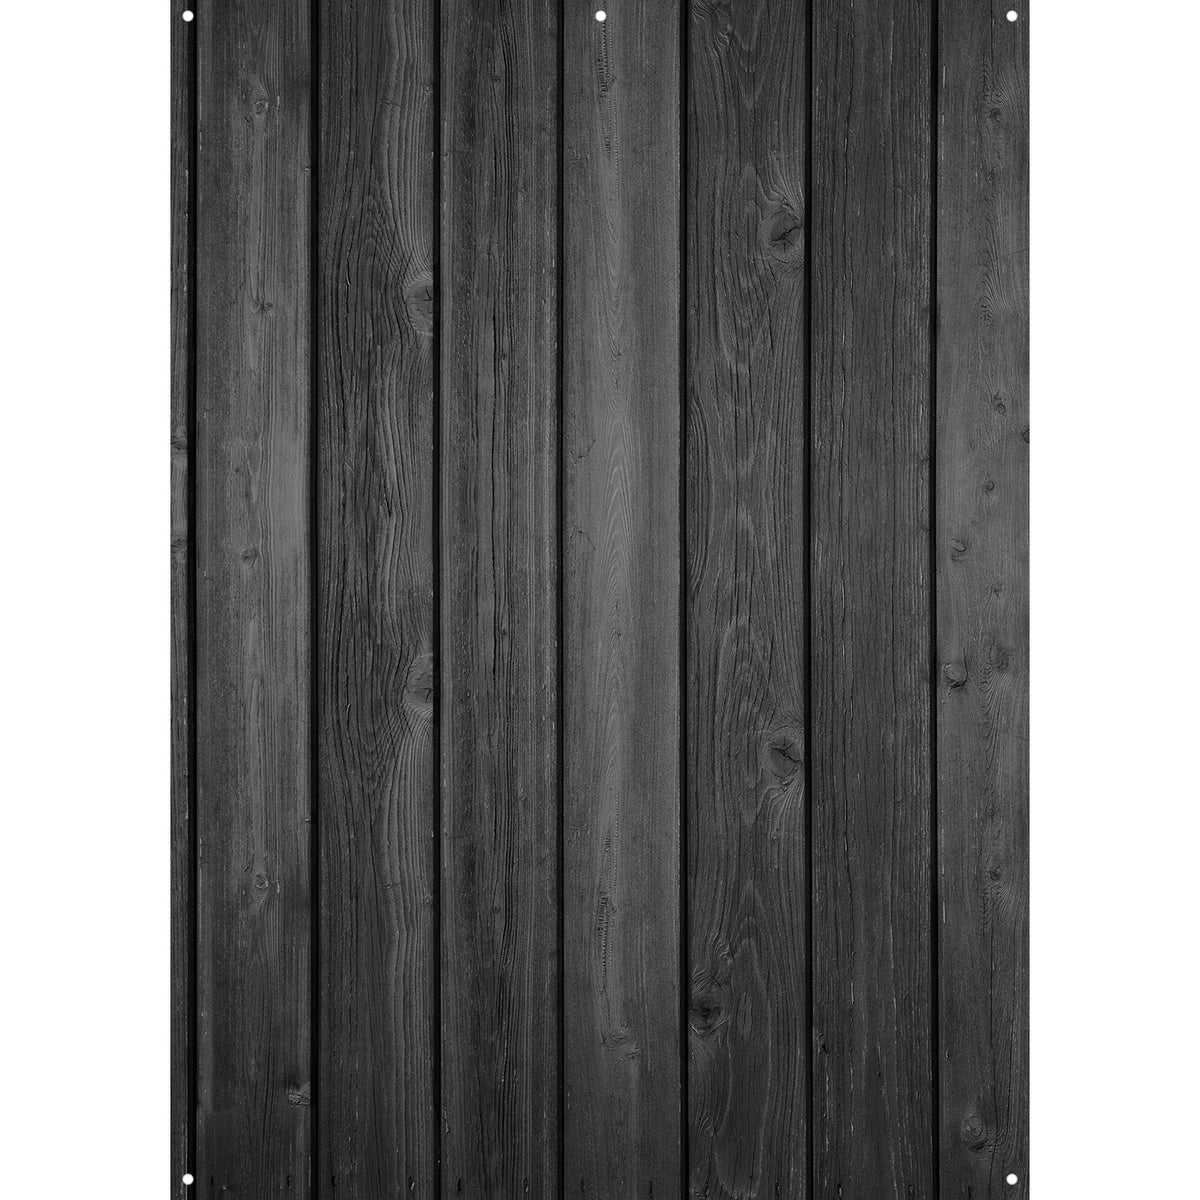 D0062 - X-Drop Backdrop - Rich GrayVertical Wood Panel (5' x 7') - X-Drop Backdrop - Rich GrayVertical Wood Panel (5' x 7') - D0062 - X-Drop Backdrop - Rich GrayVertical Wood Panel (5' x 7')